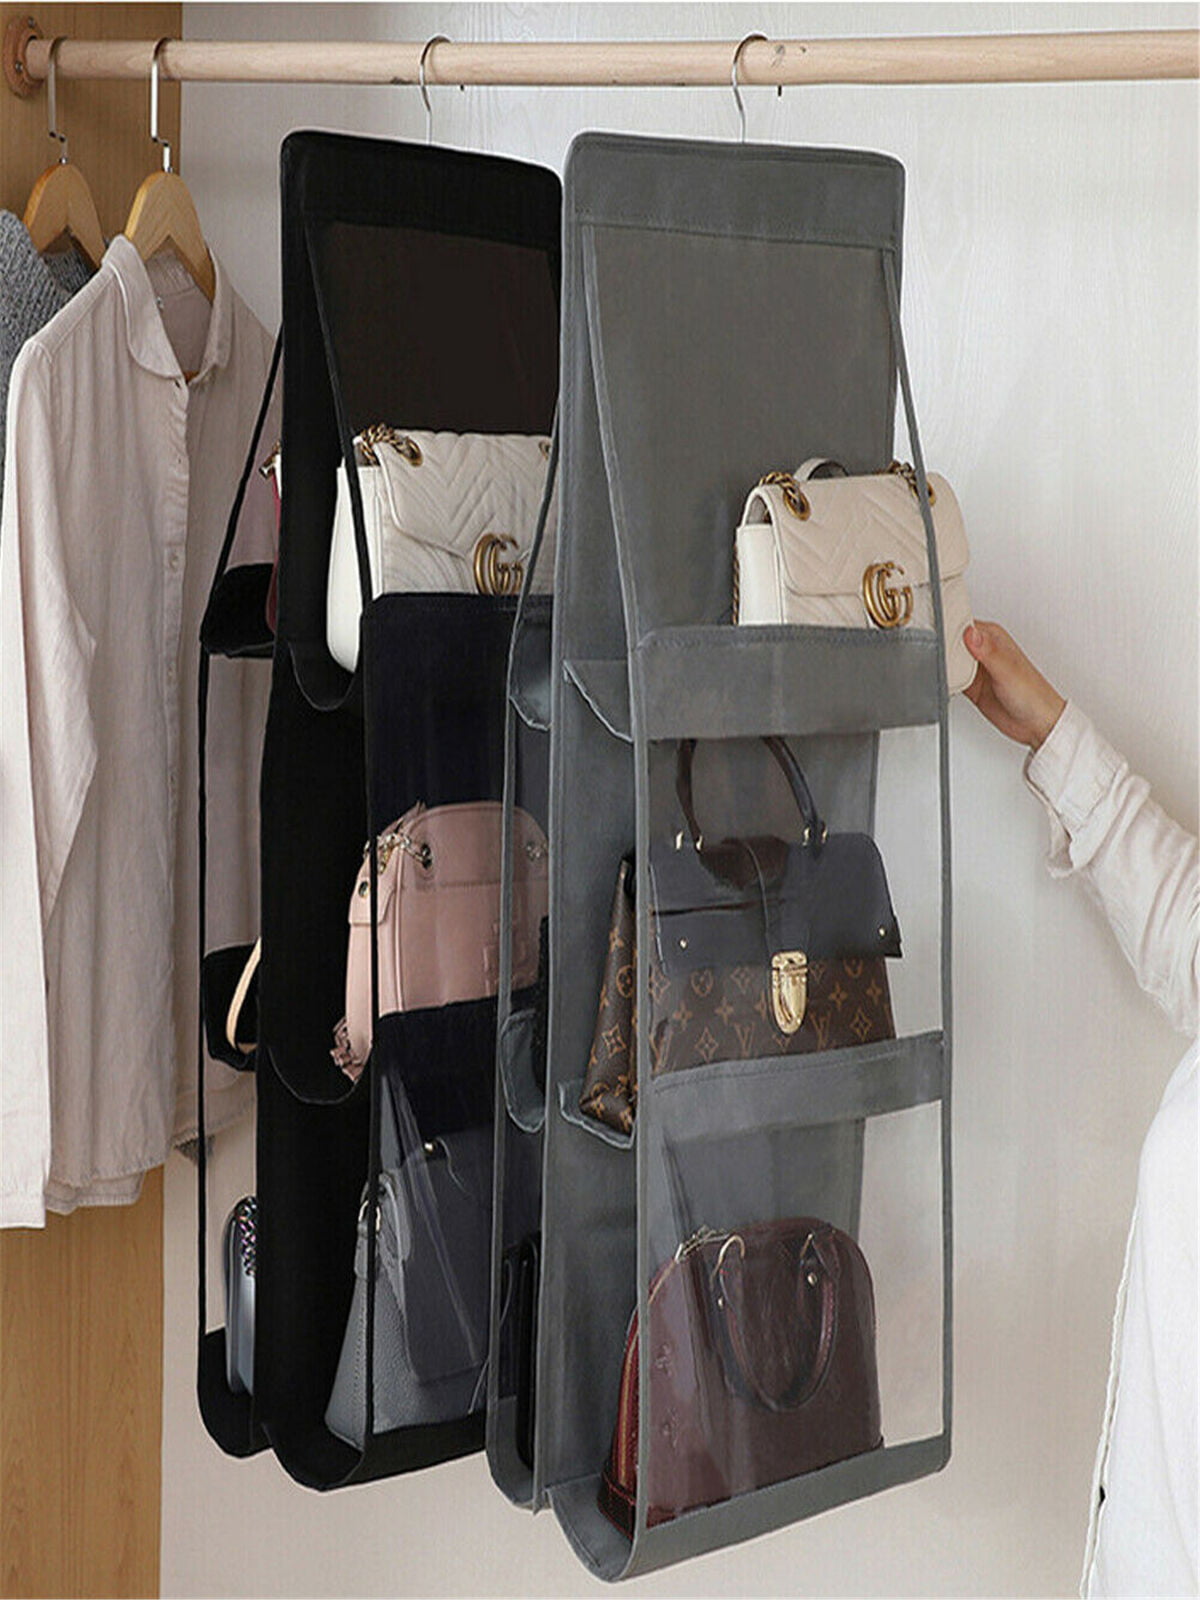 Hanging Handbag Organizer 3/4 Layer Shelf Bag Storage Holder Wardrobe Closets 